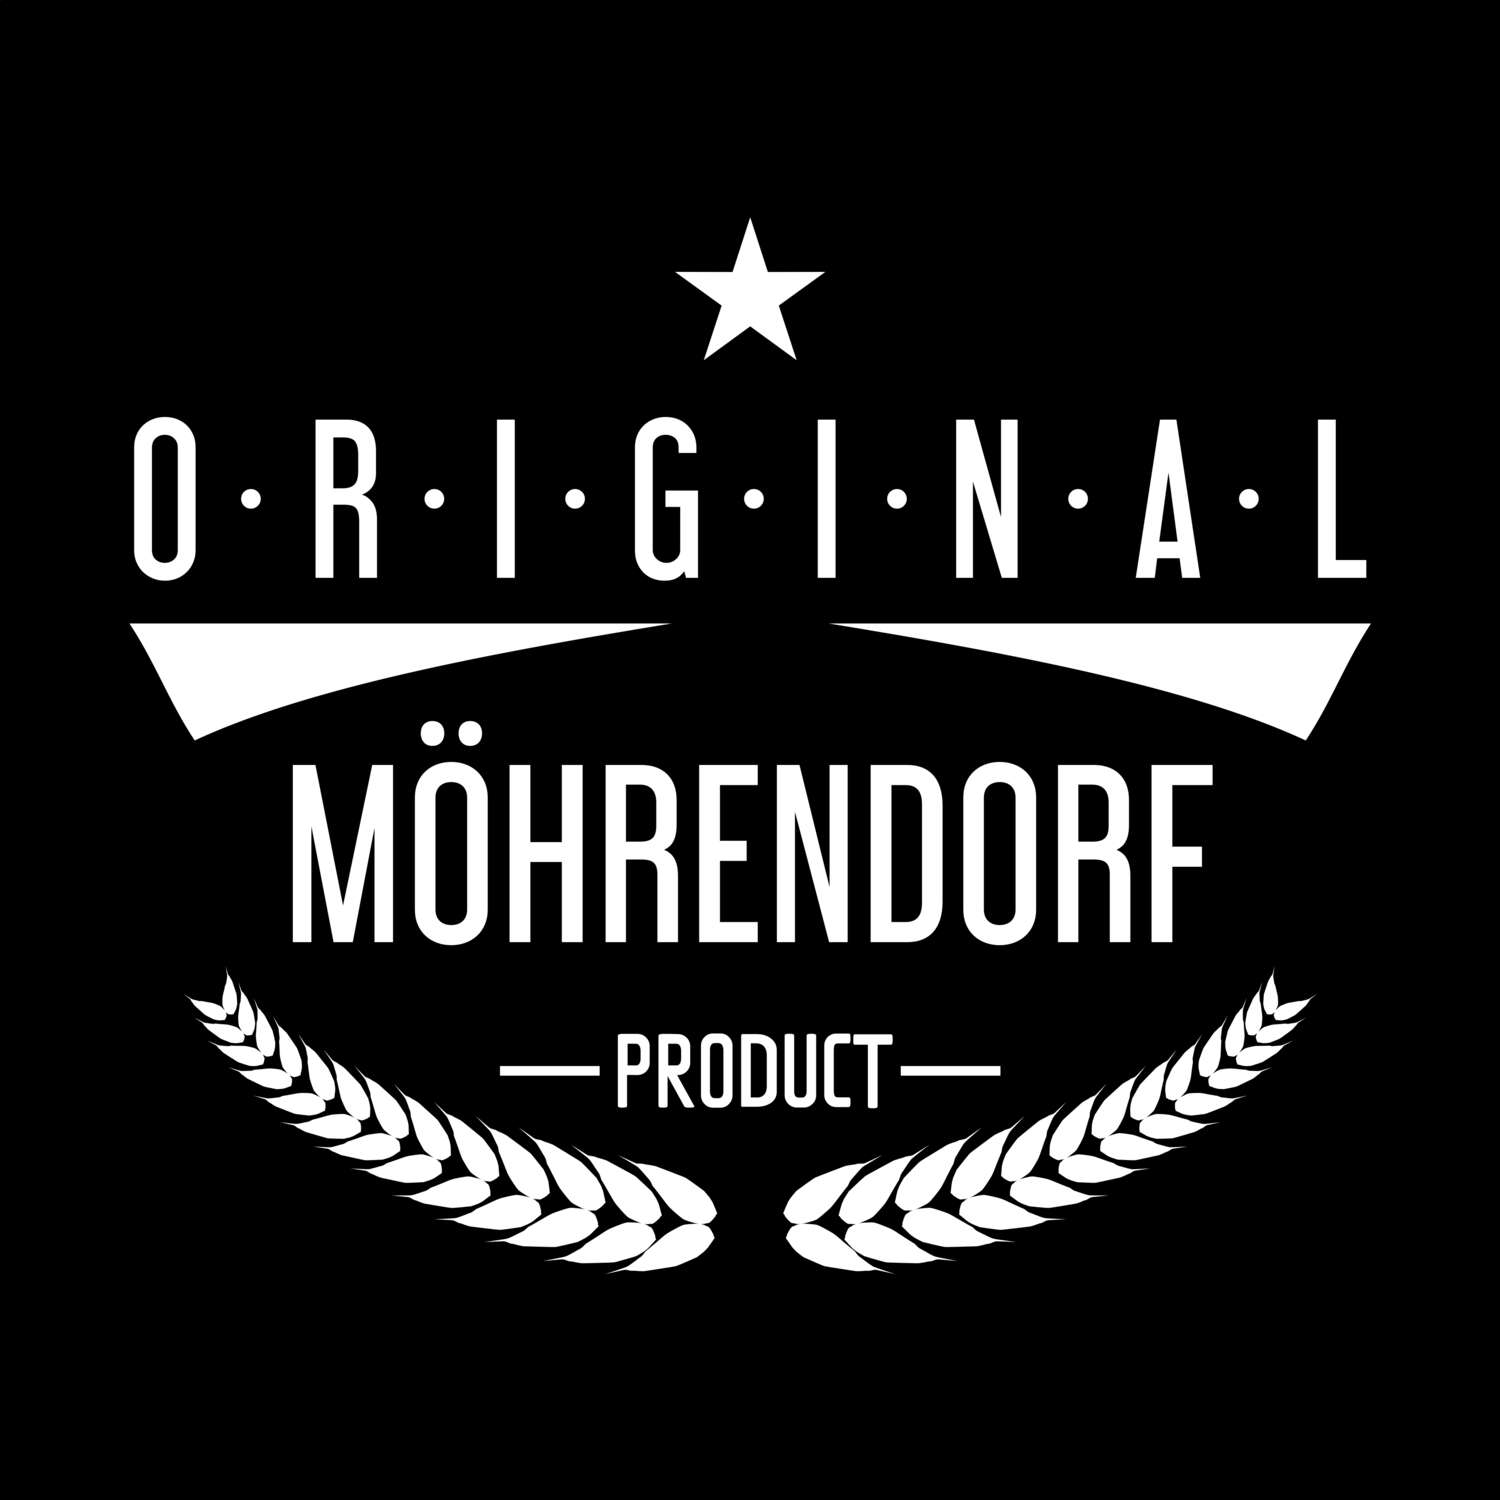 Möhrendorf T-Shirt »Original Product«